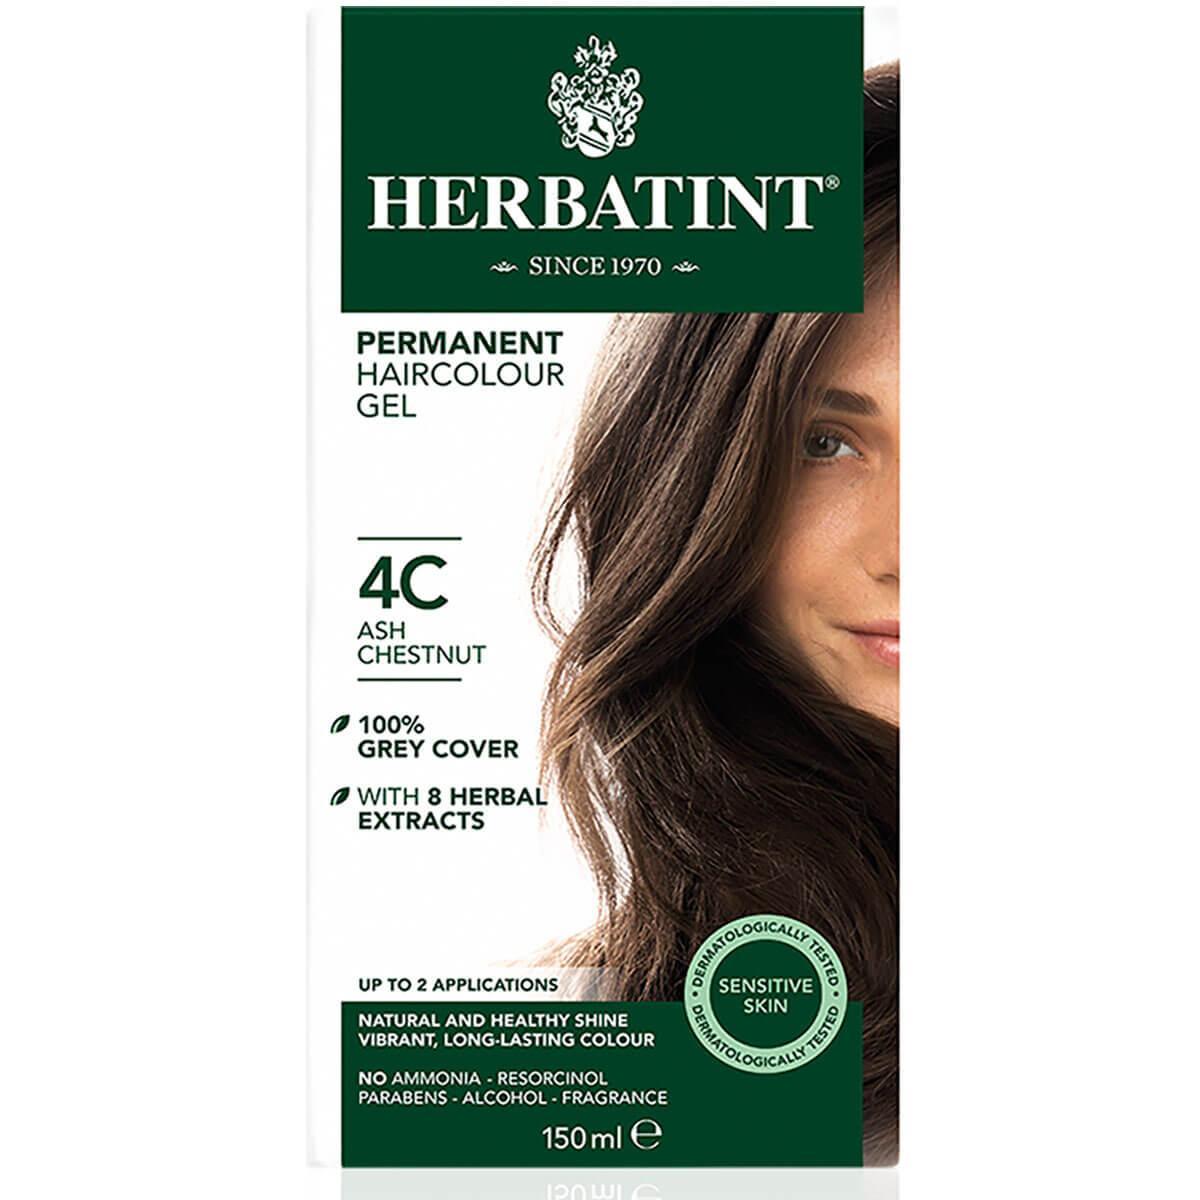 Chestnut, Ash (4C) - Herbatint Permanent Hair Colour Gel